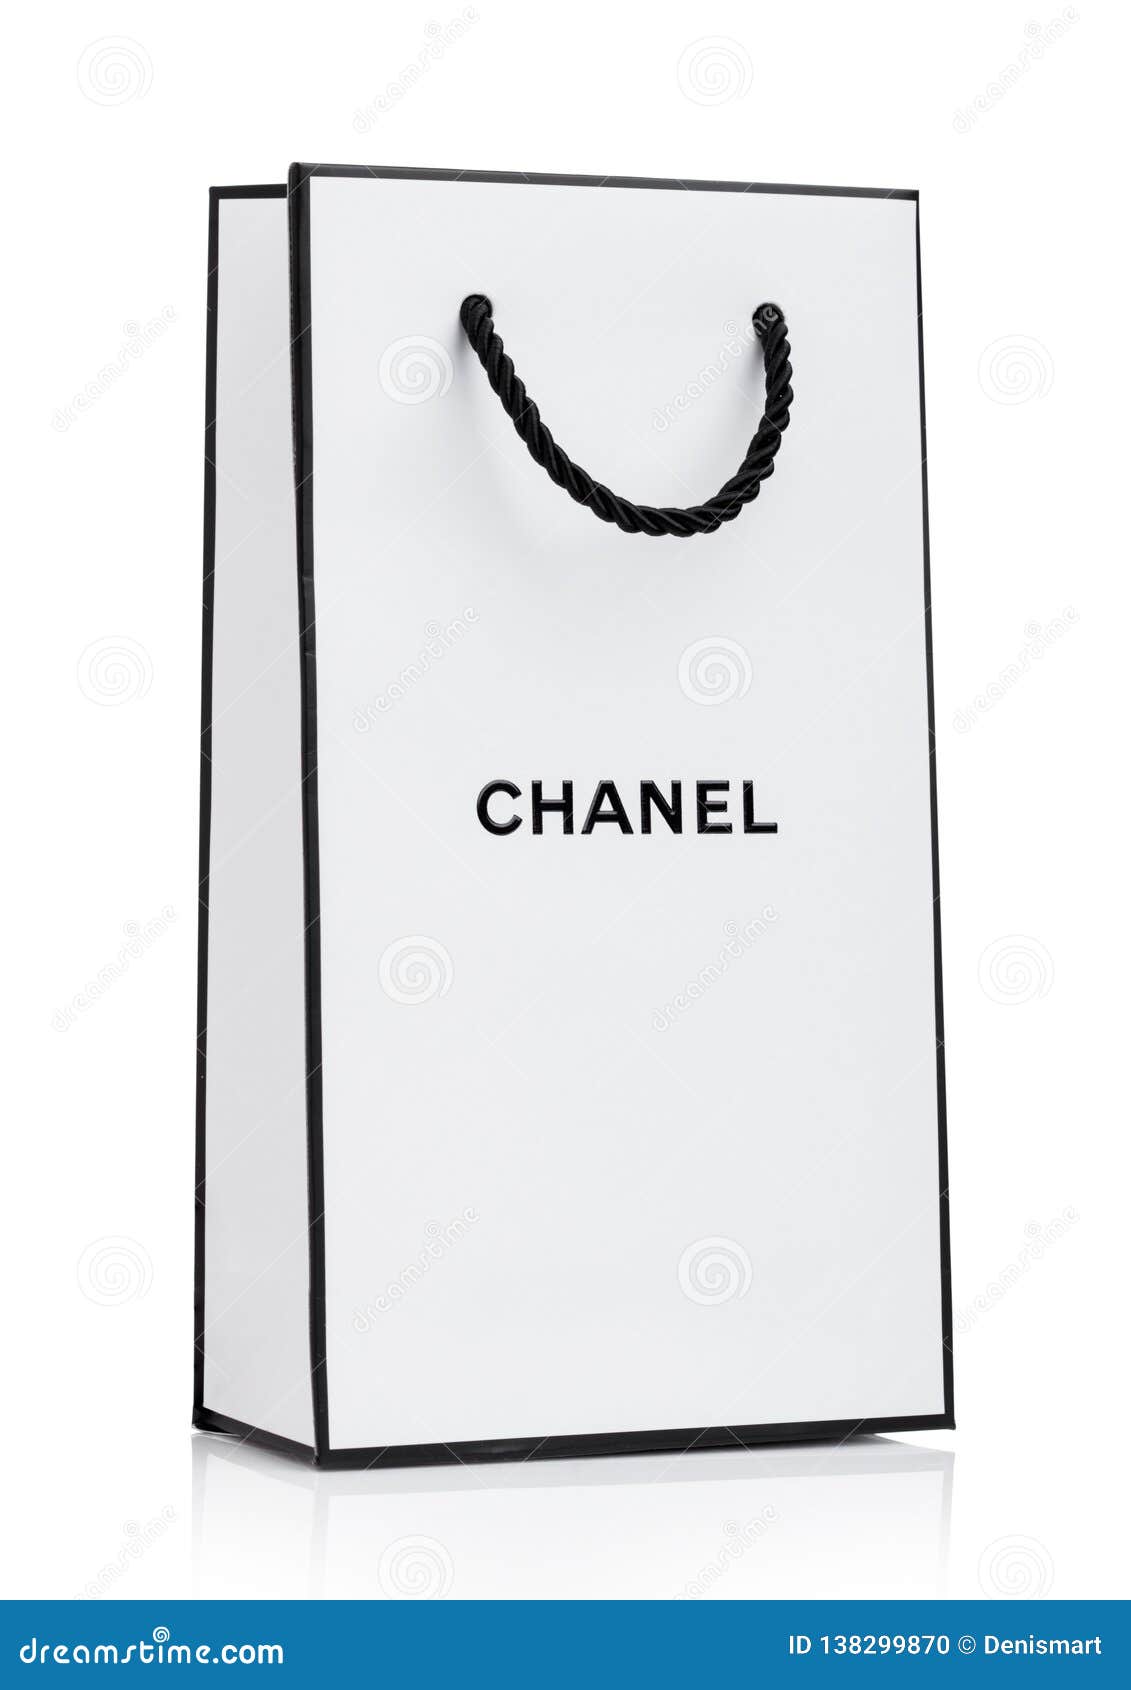 Marmont Hill MH-DNTEL-13-WW-60 40 x 60 Chanel Bag Black Gicl?e Art Print  on Wood by Dantell - 40 x 40 - Bed Bath & Beyond - 16932686